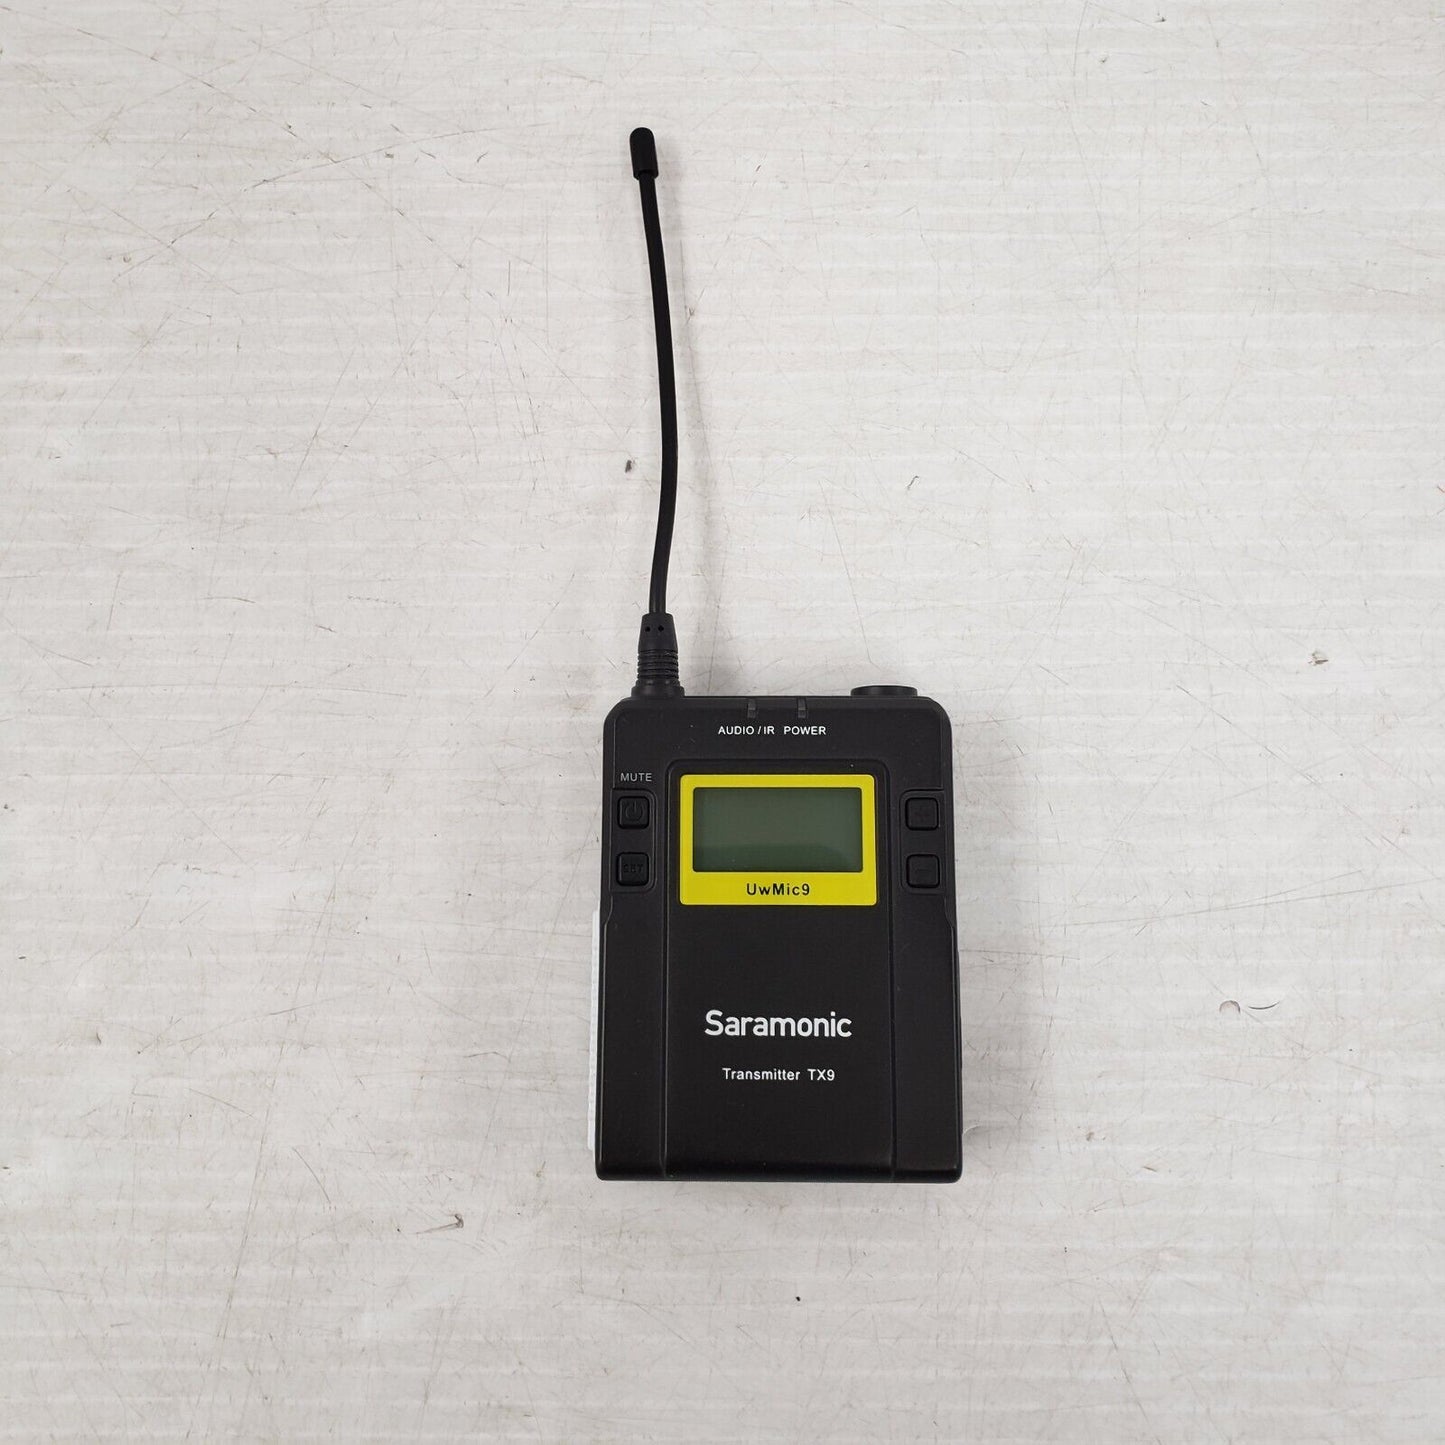 (55671-1) Saramonic UWMIC9-RX9 Microphone System